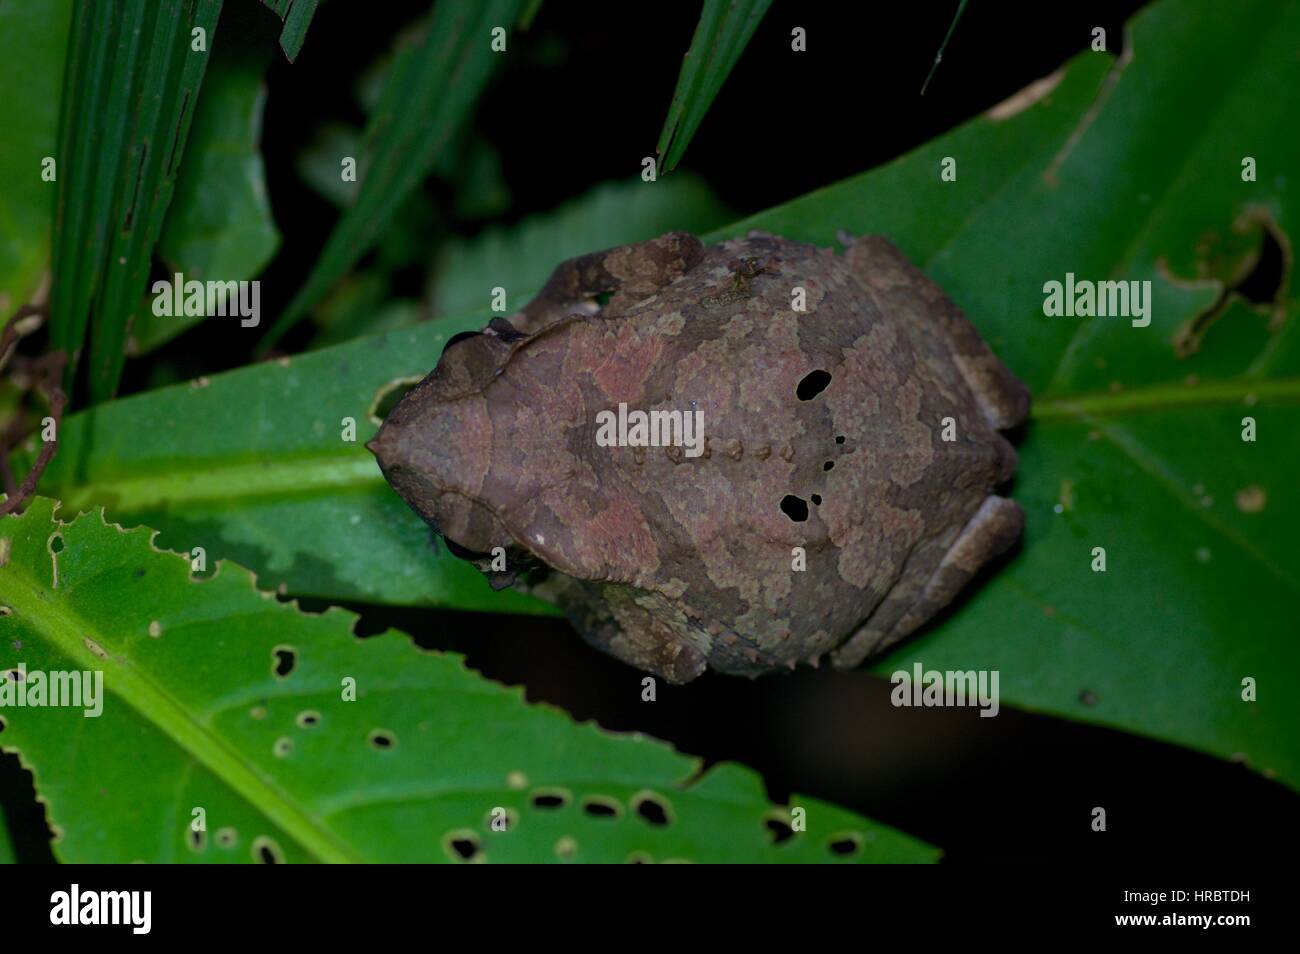 A South American Common Toad (Rhinella margaritifera) on a leaf in the Amazon rainforest in Loreto, Peru Stock Photo